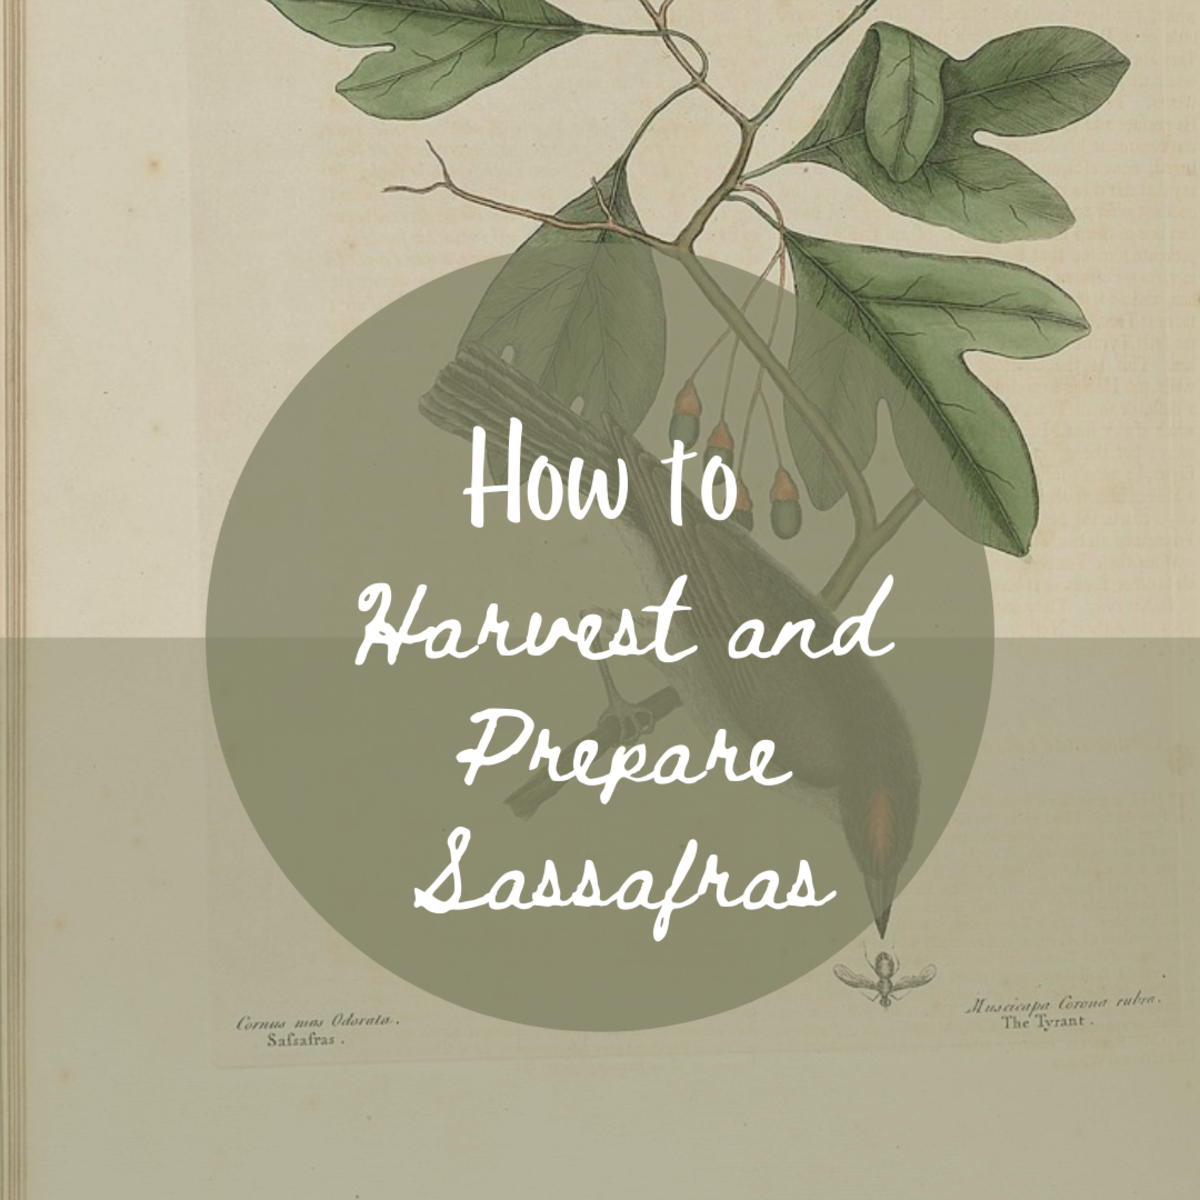 How to Prepare and Harvest Sassafras